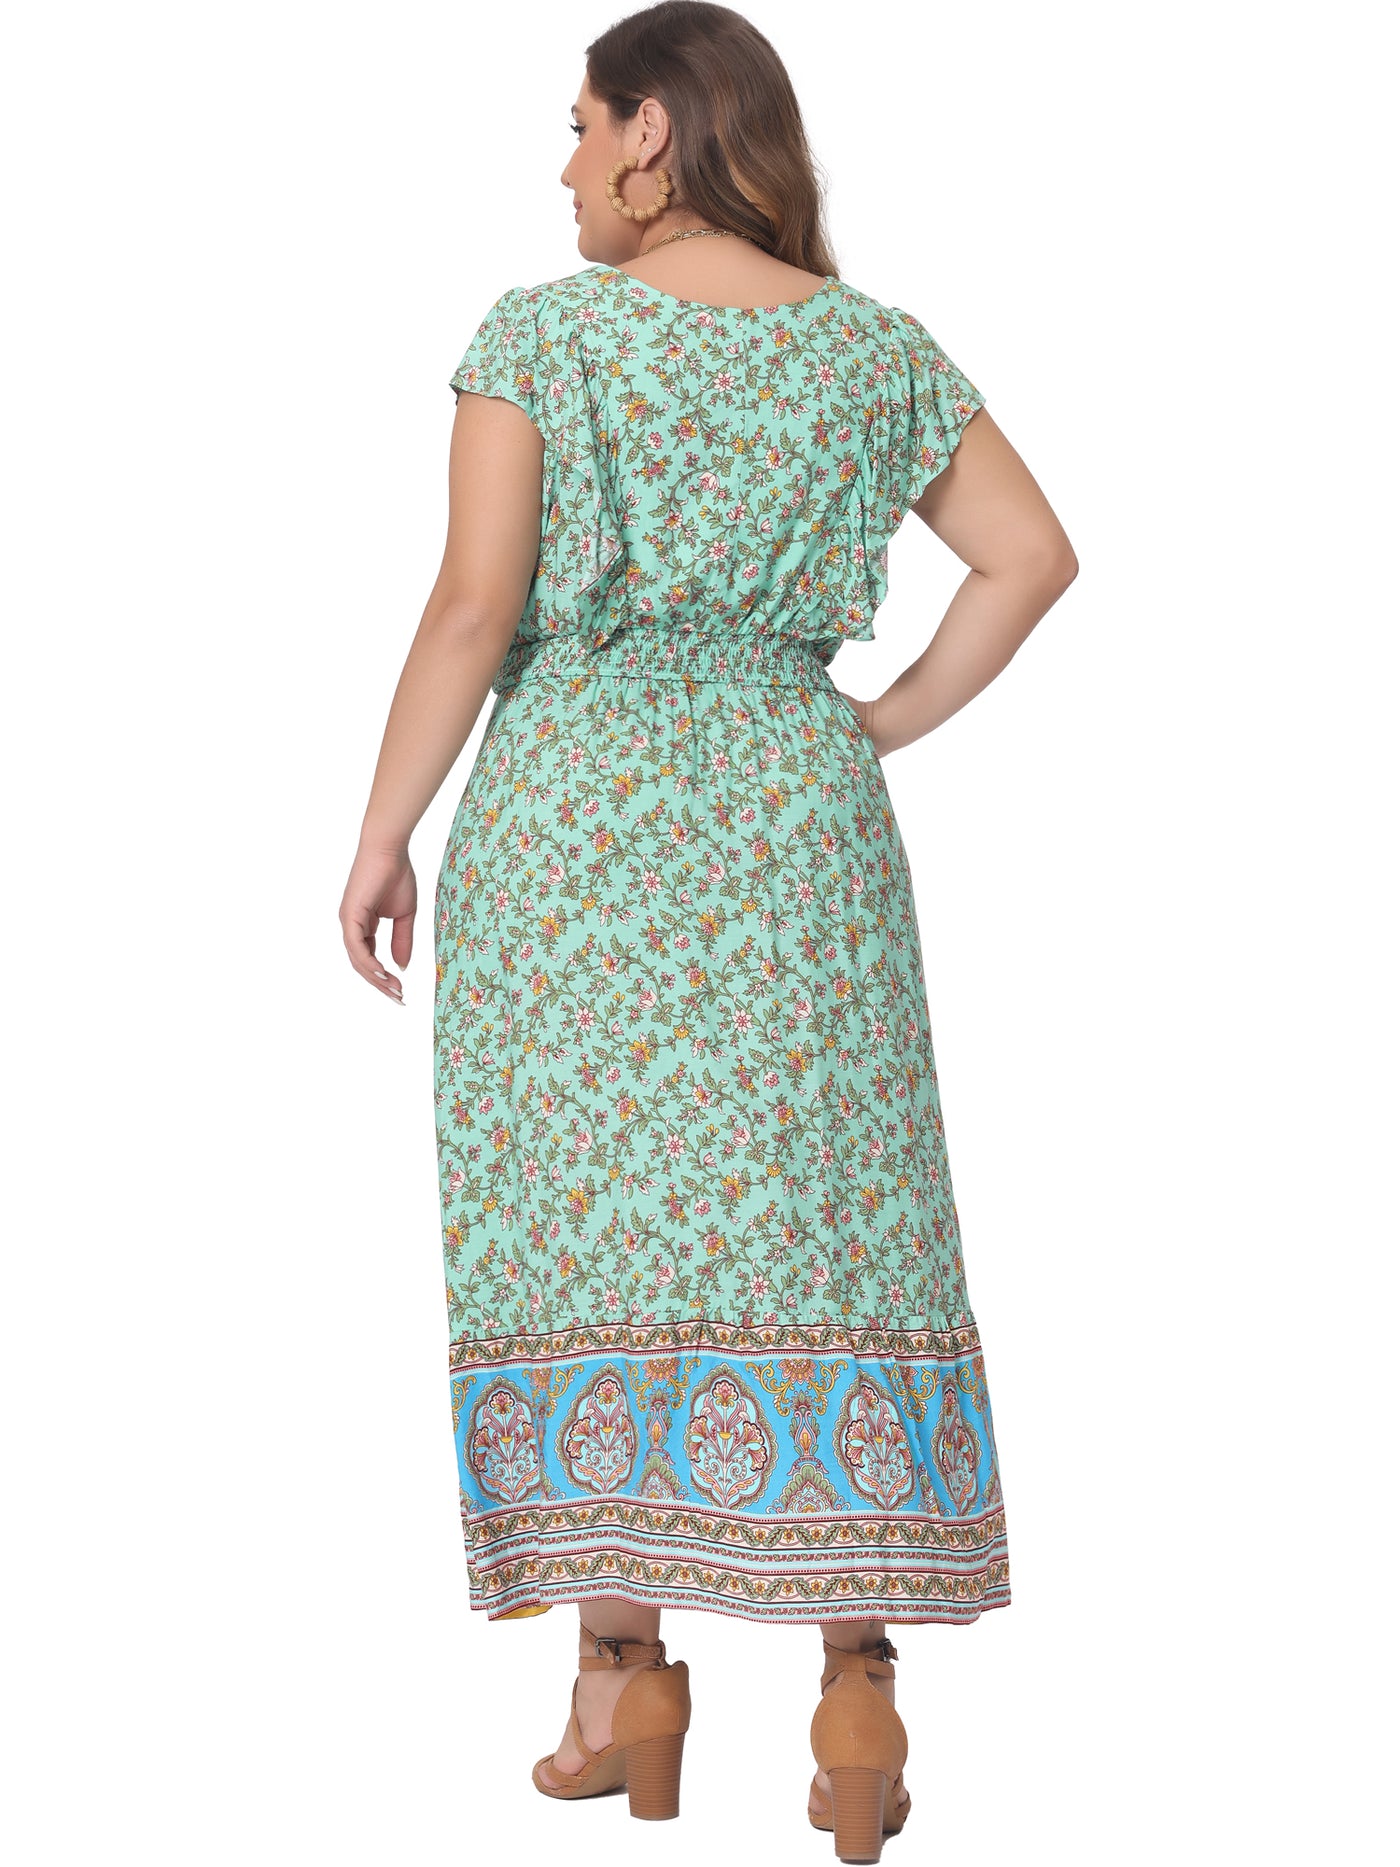 Bublédon Plus Size Dress for Women Bohemian Floral V Neck Ruffle Sleeve Summer Beach Casual Boho Maxi Dresses